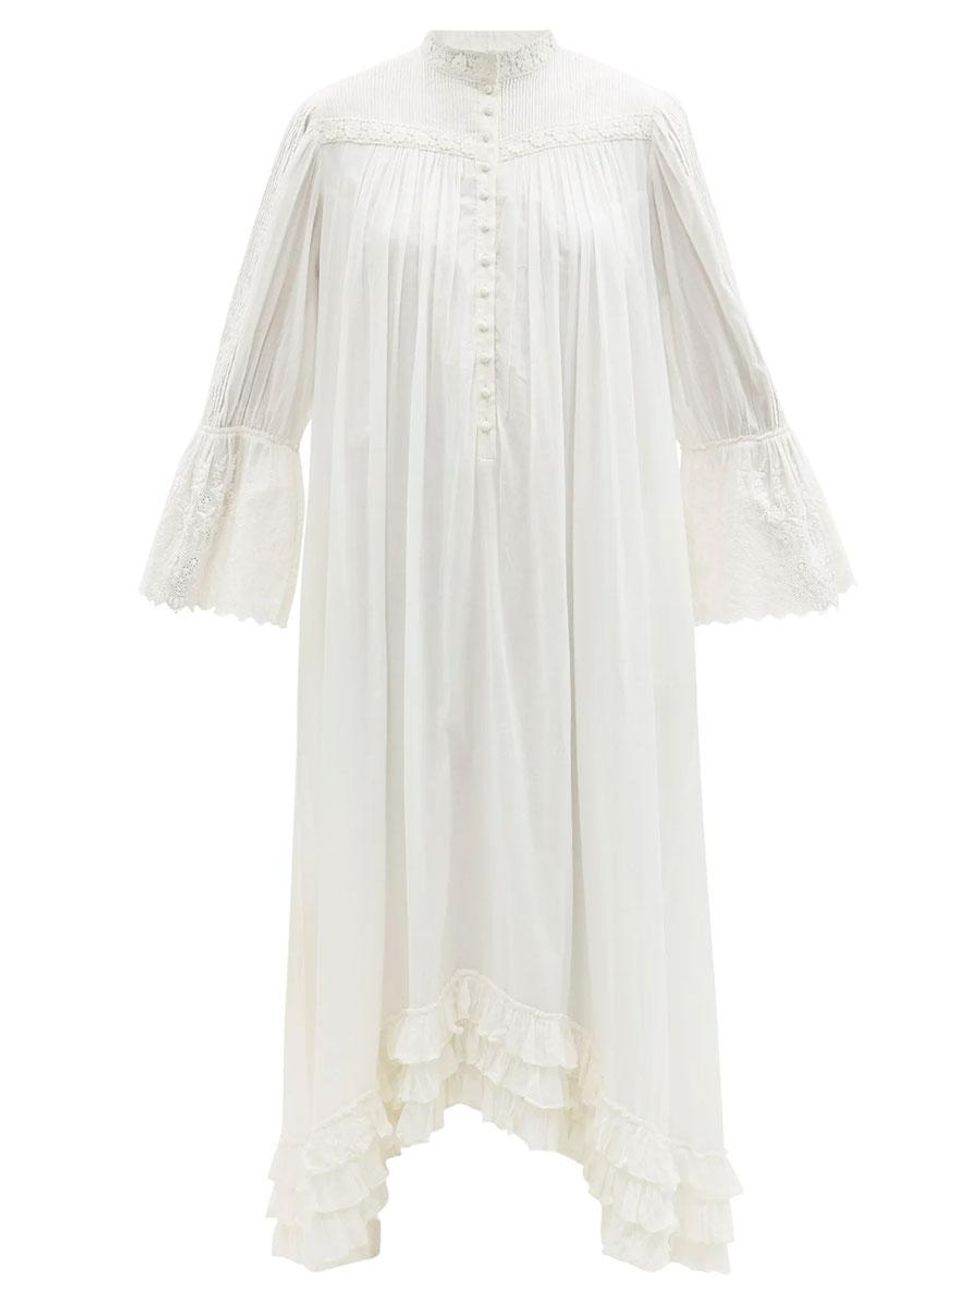 Shop White Dresses to Wear This Summer - Coveteur: Inside Closets ...